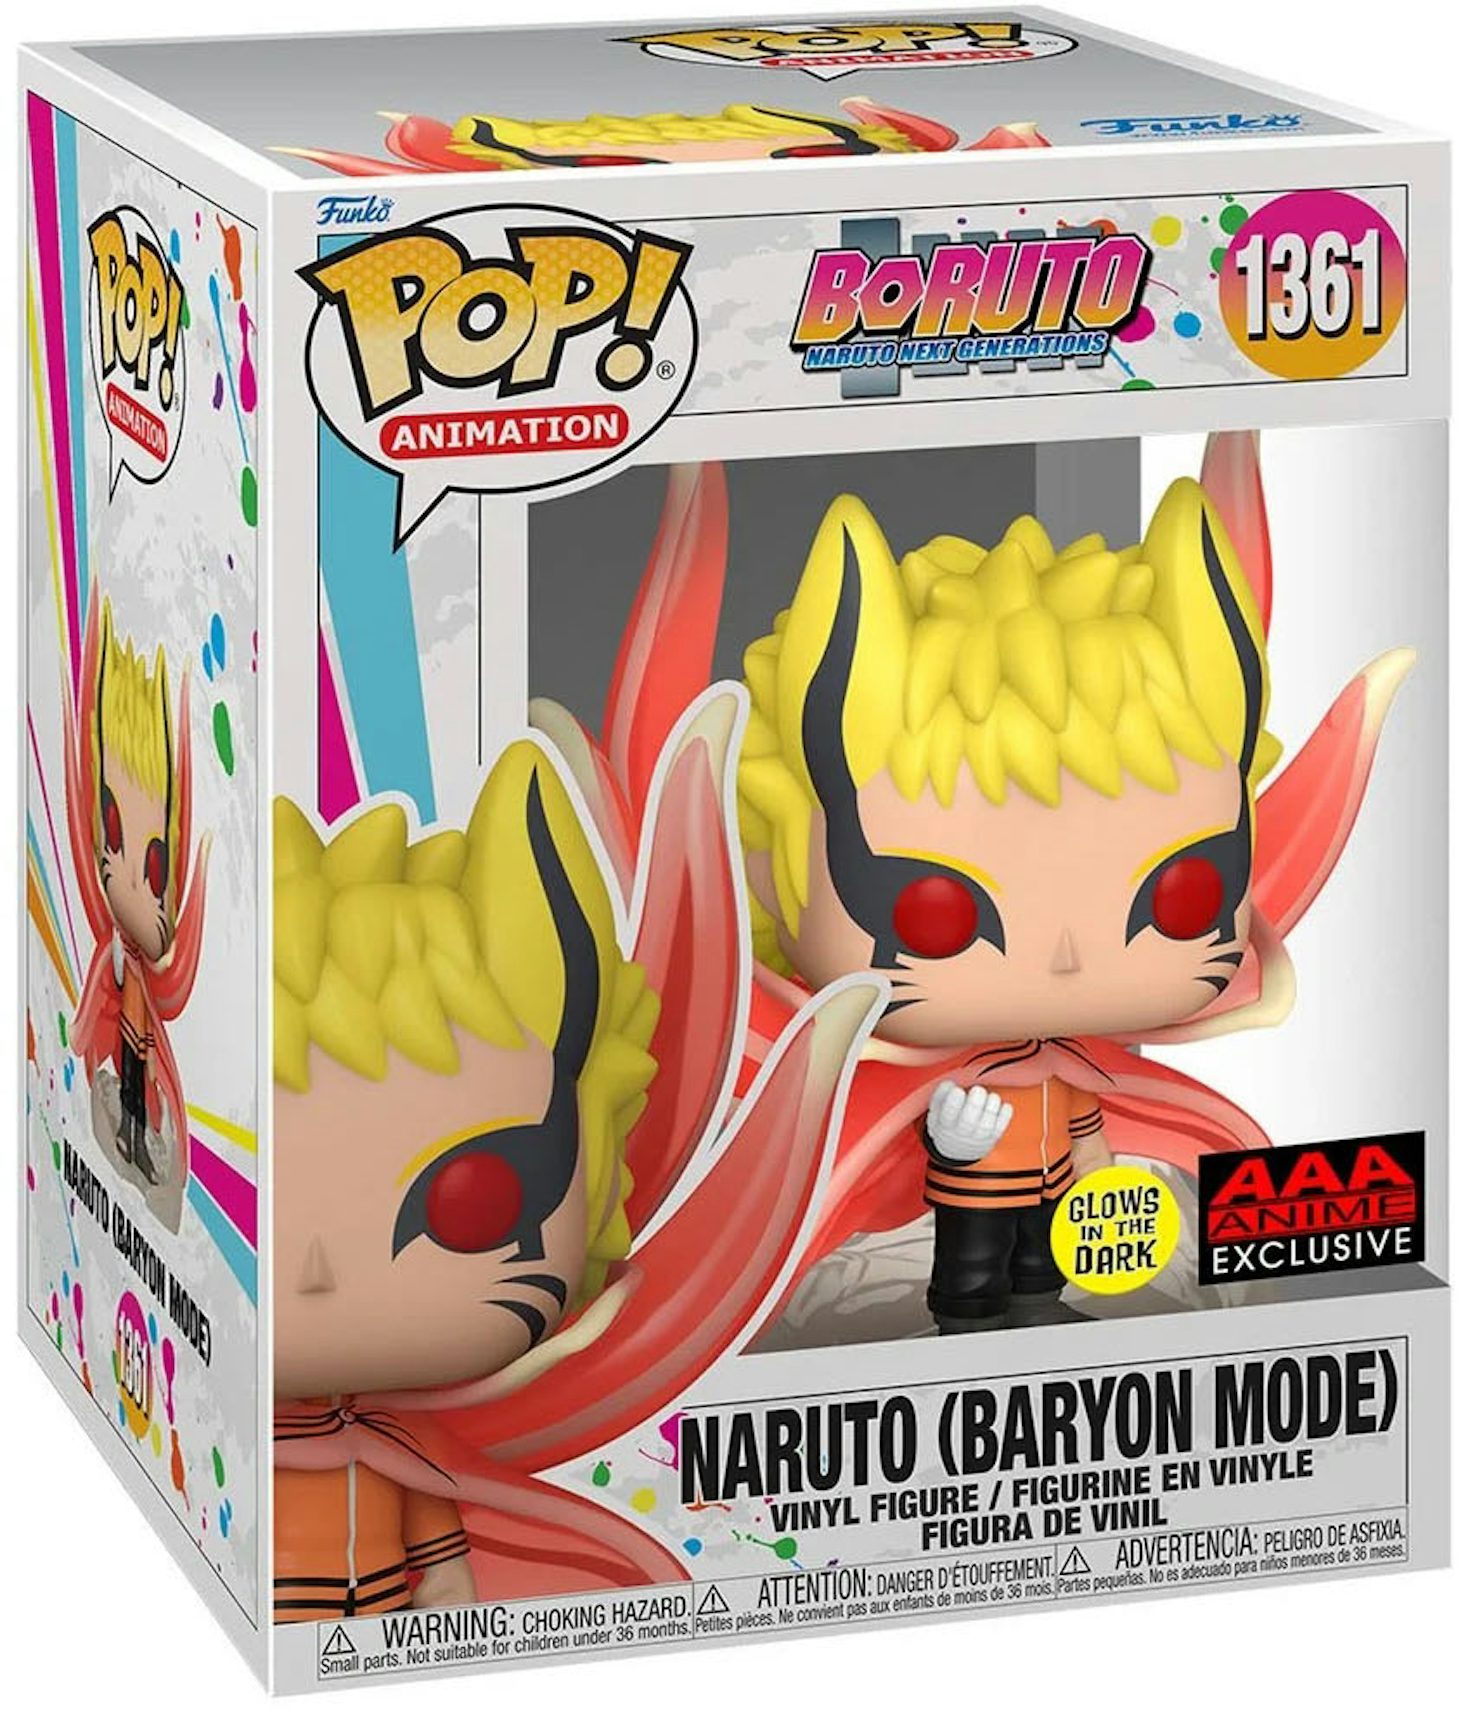  Funko Boruto Naruto (Hokage) Pop Figure (AAA Anime Exclusive) :  Toys & Games